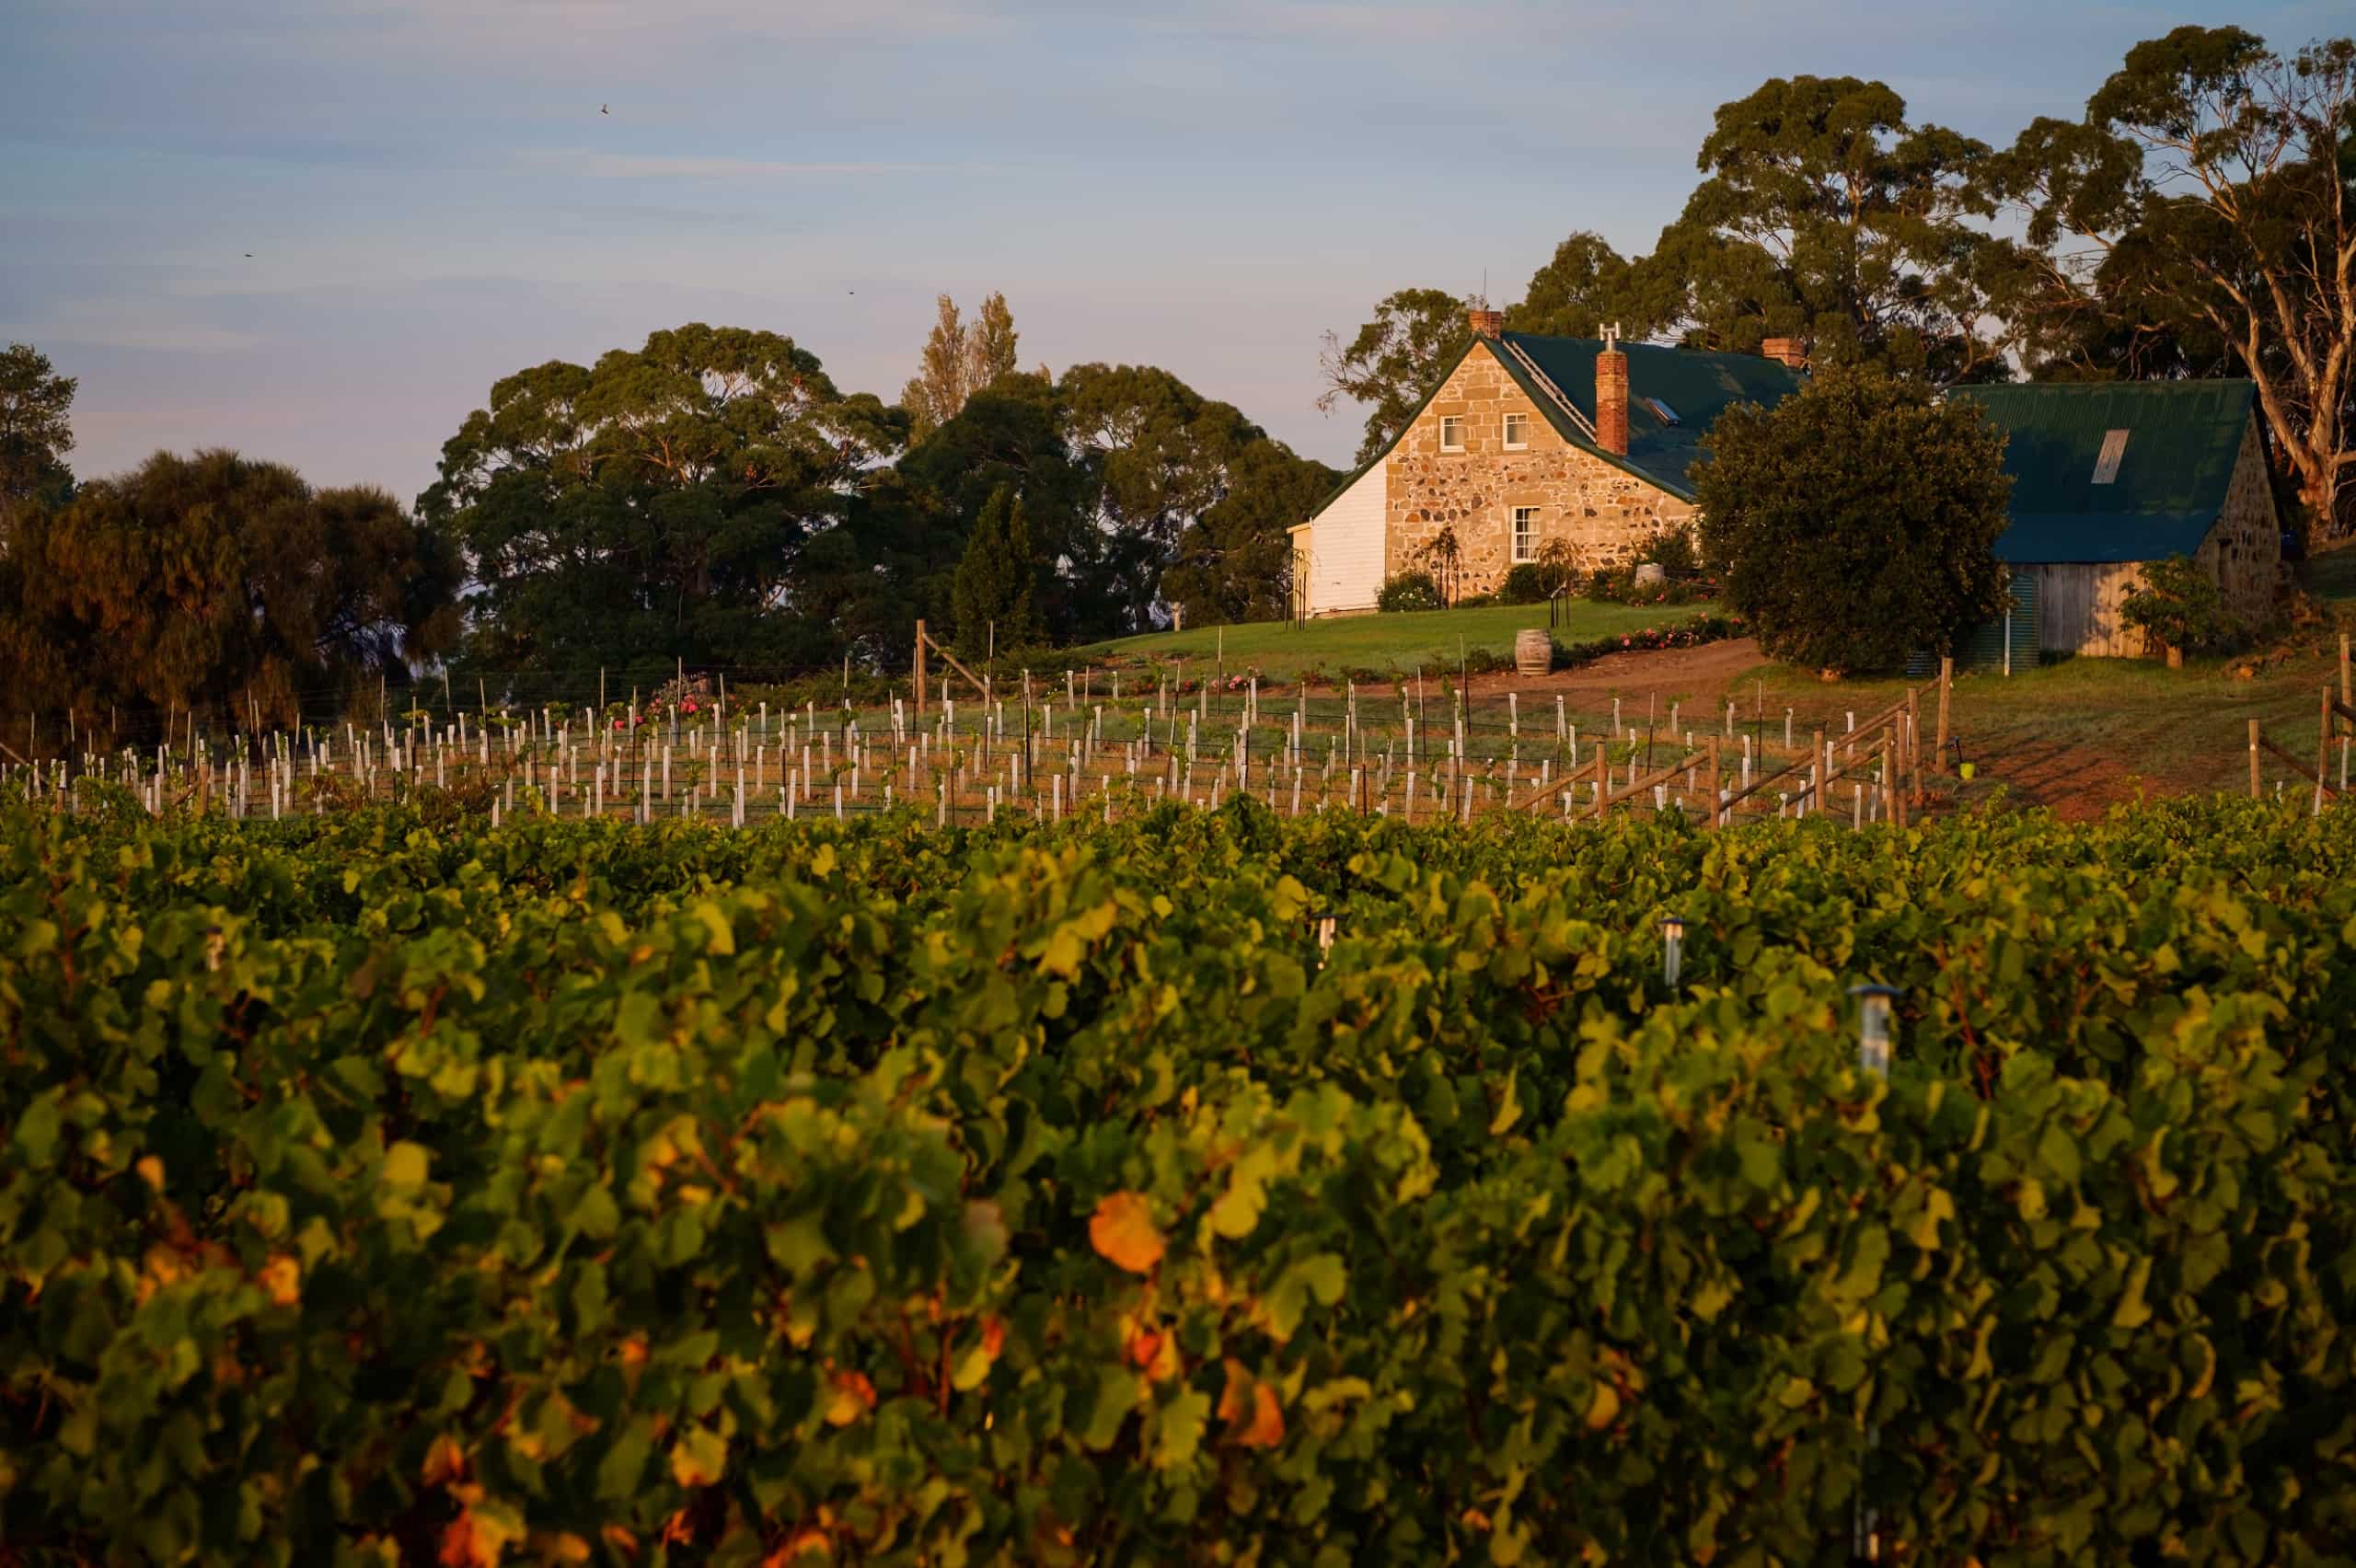 The vines and homestead at Craigie Knowe Vineyard